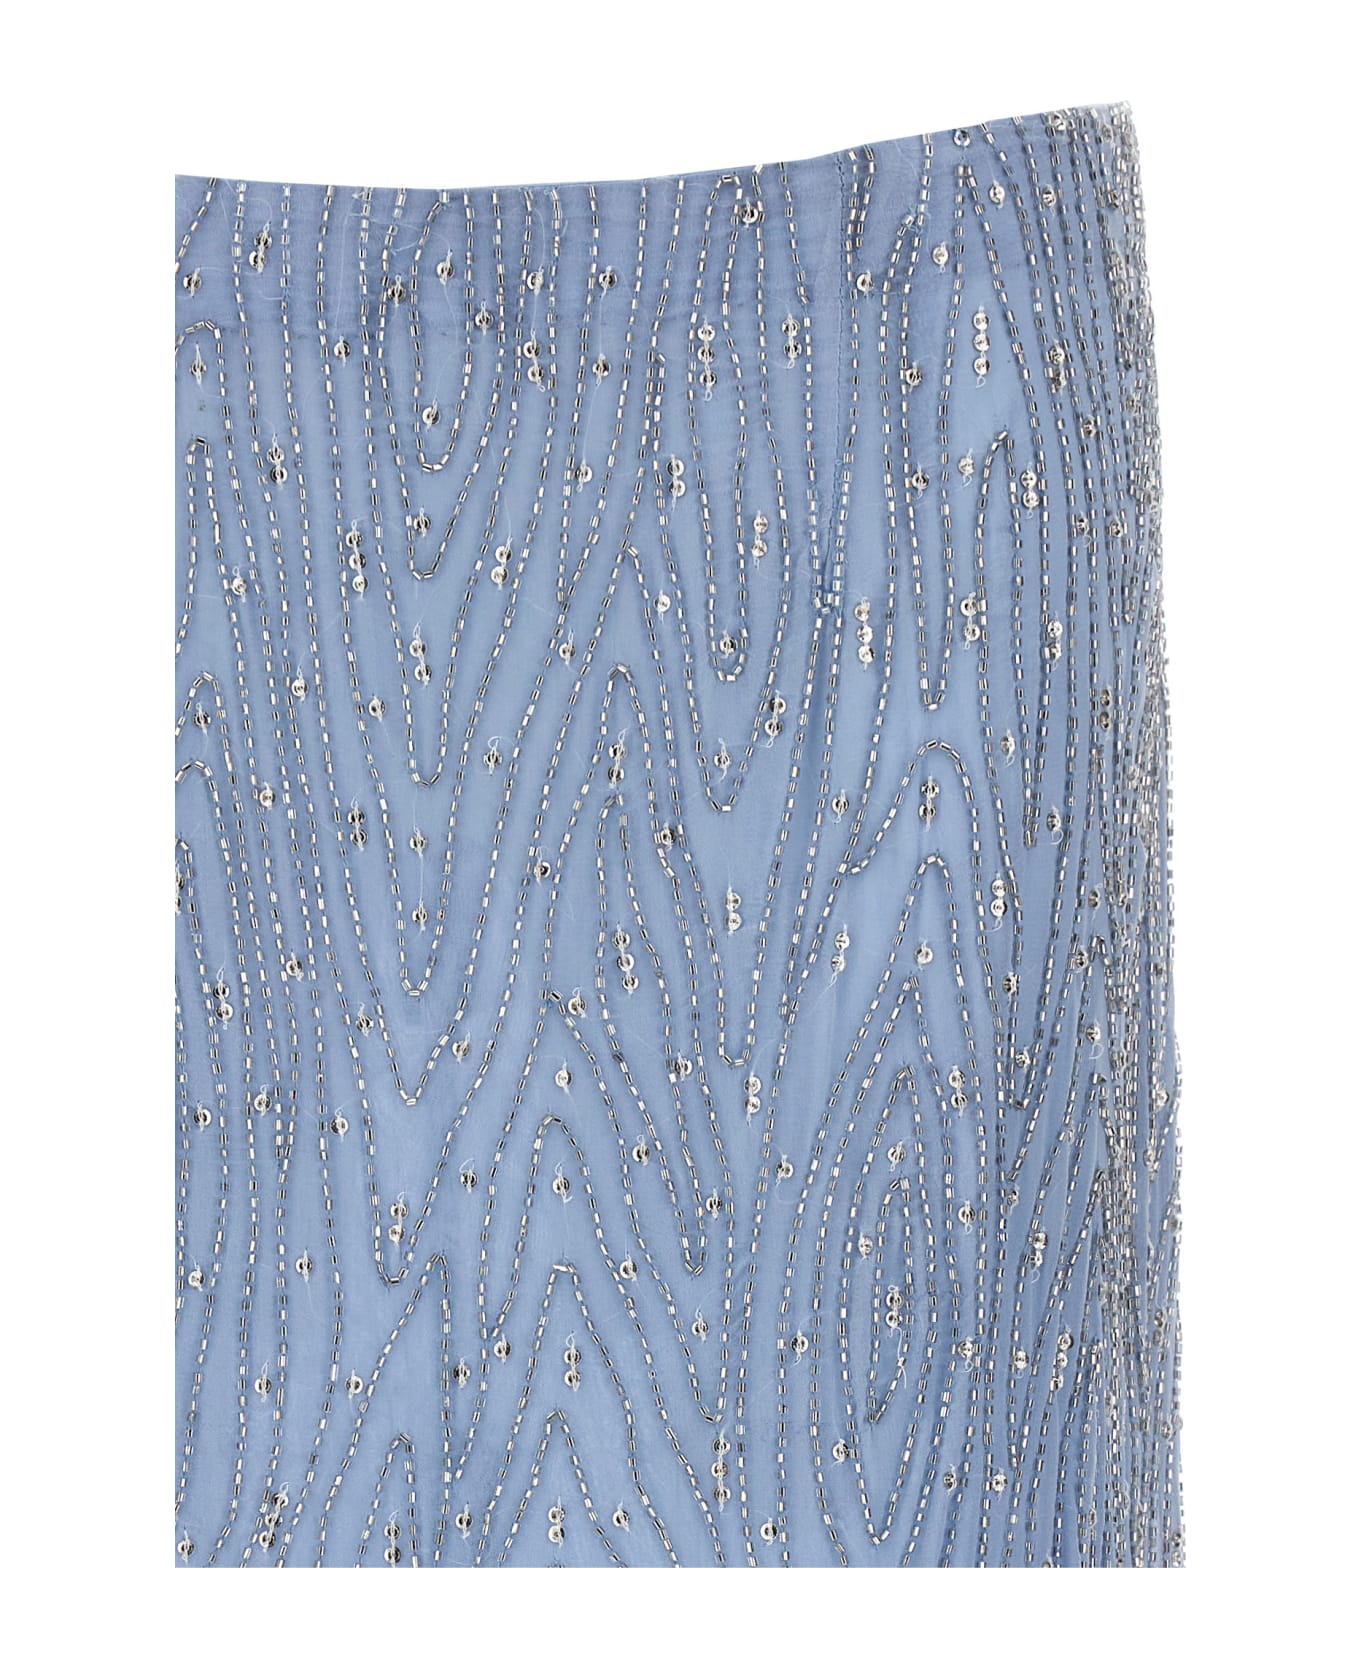 Parosh Sequins And Beads Skirt - Light Blue